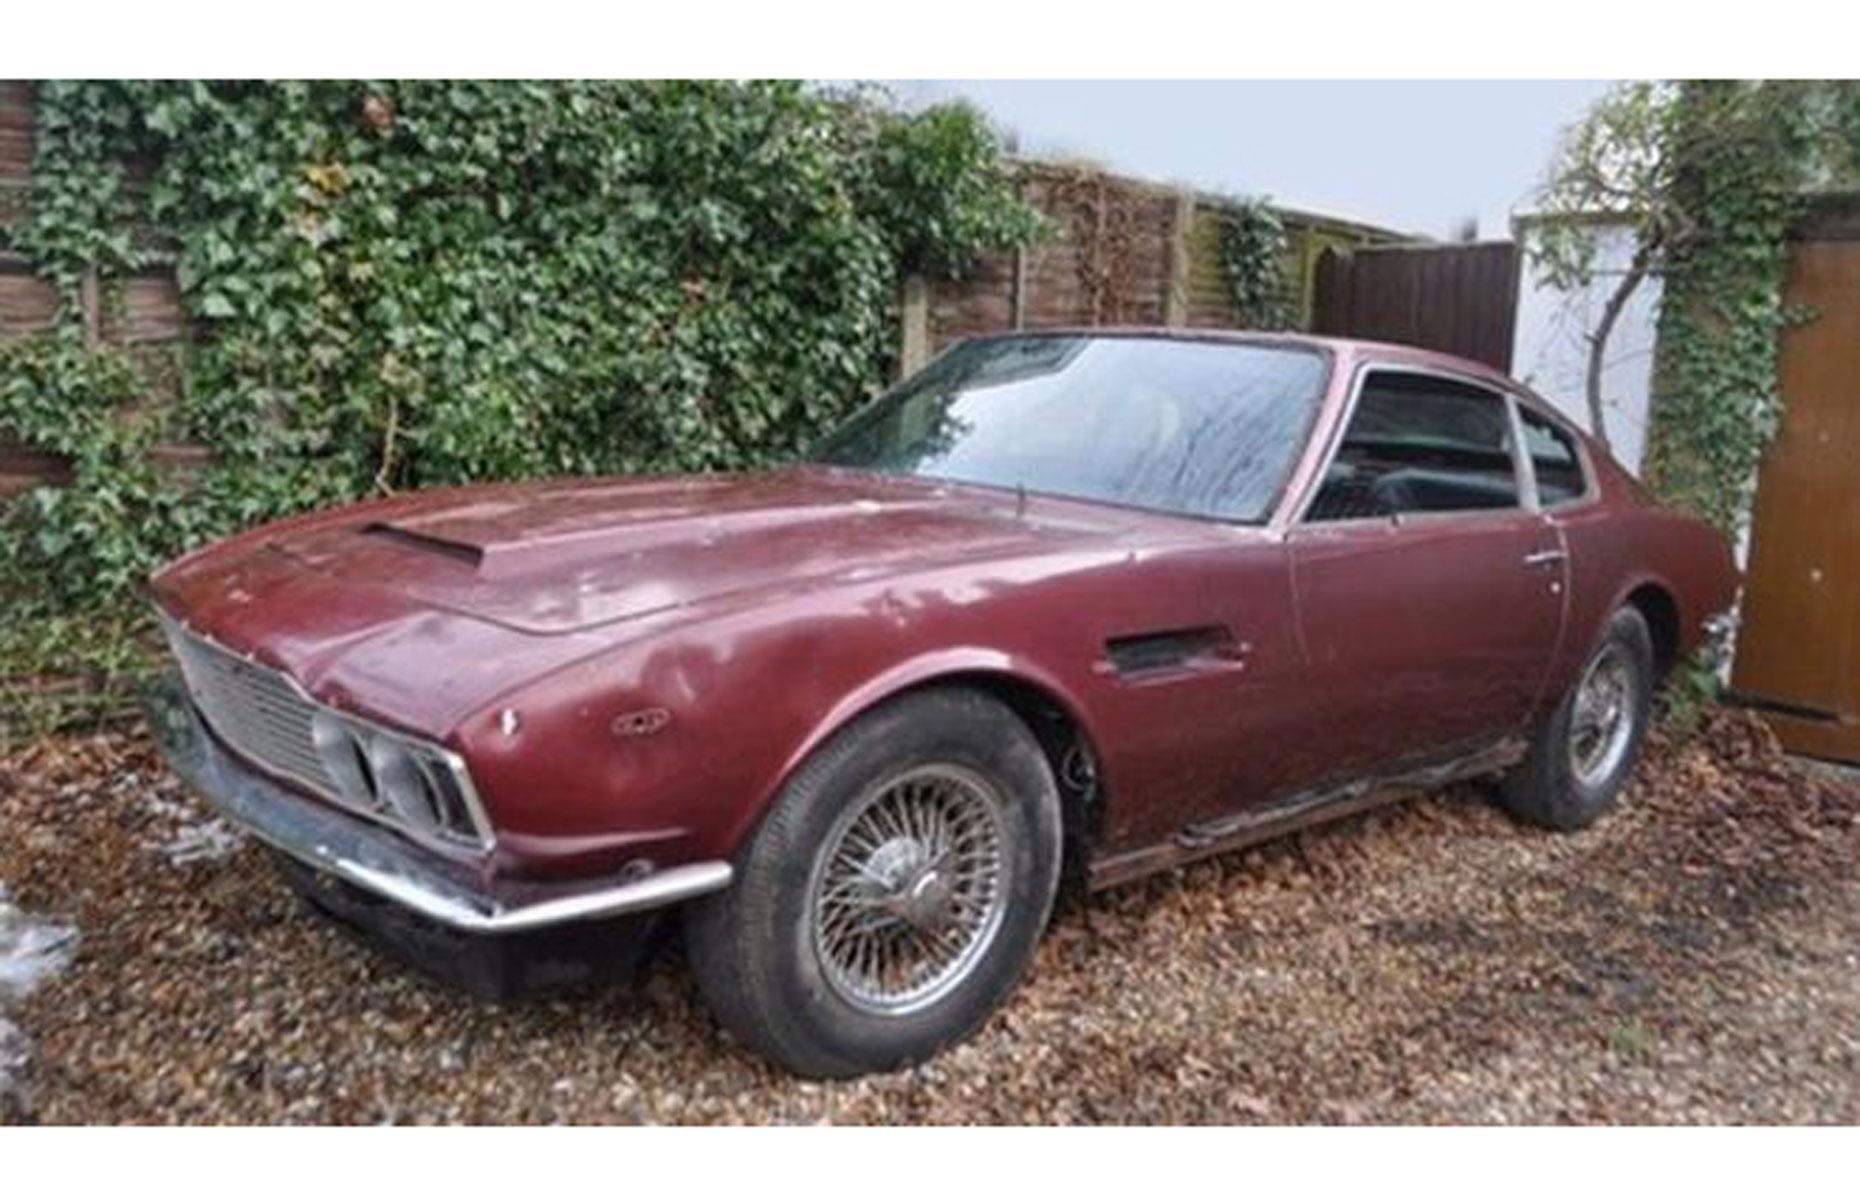 1972 Aston Martin DBS: $69,000 (£45k)